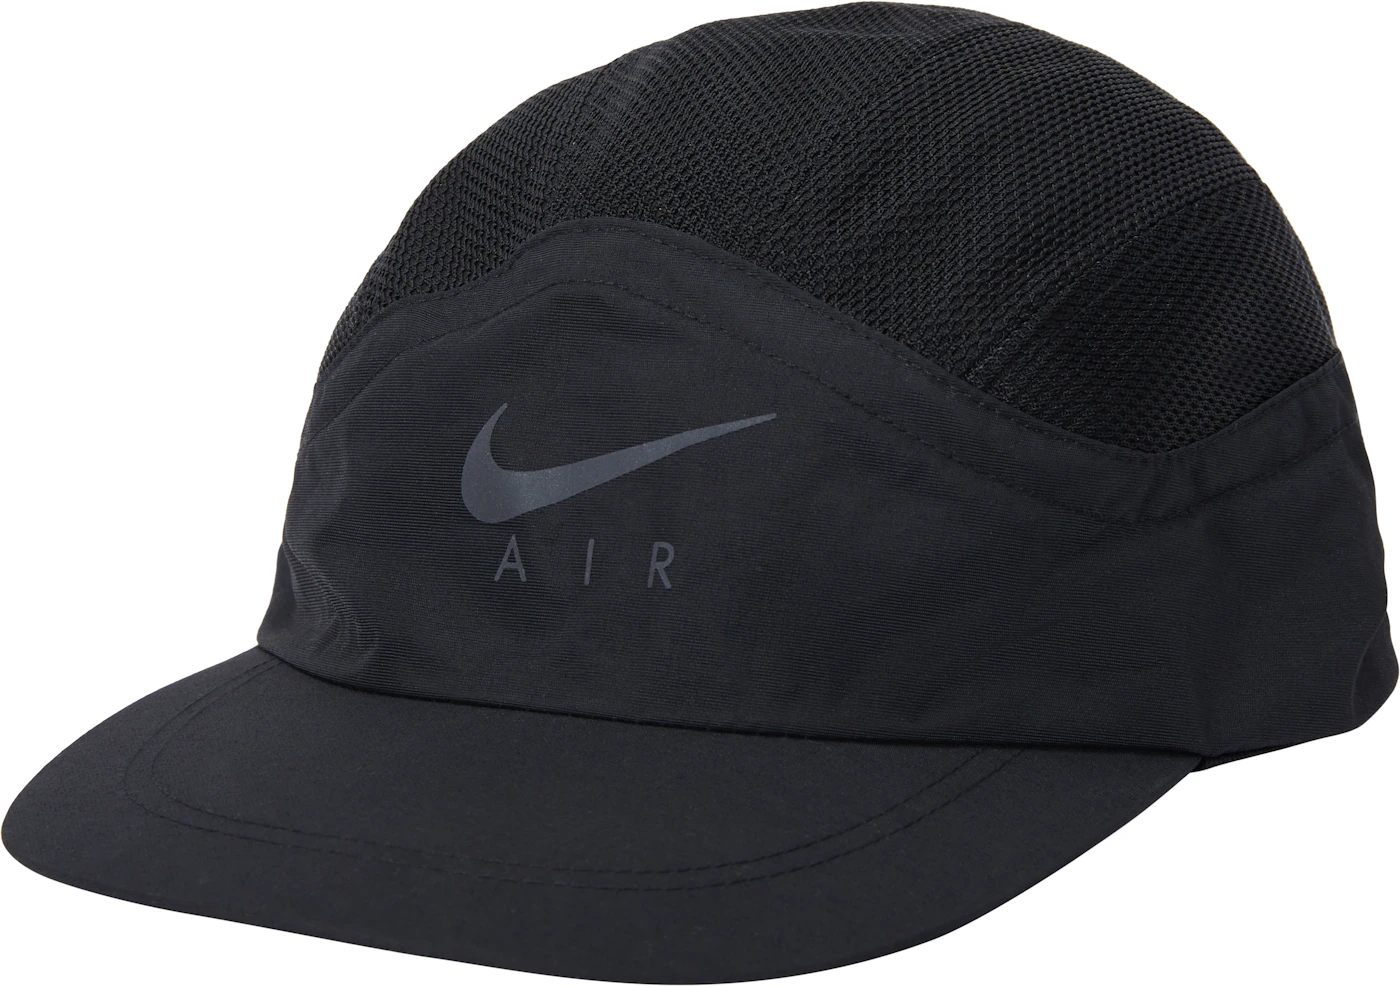 Supreme Nike Trail Hat Black - US